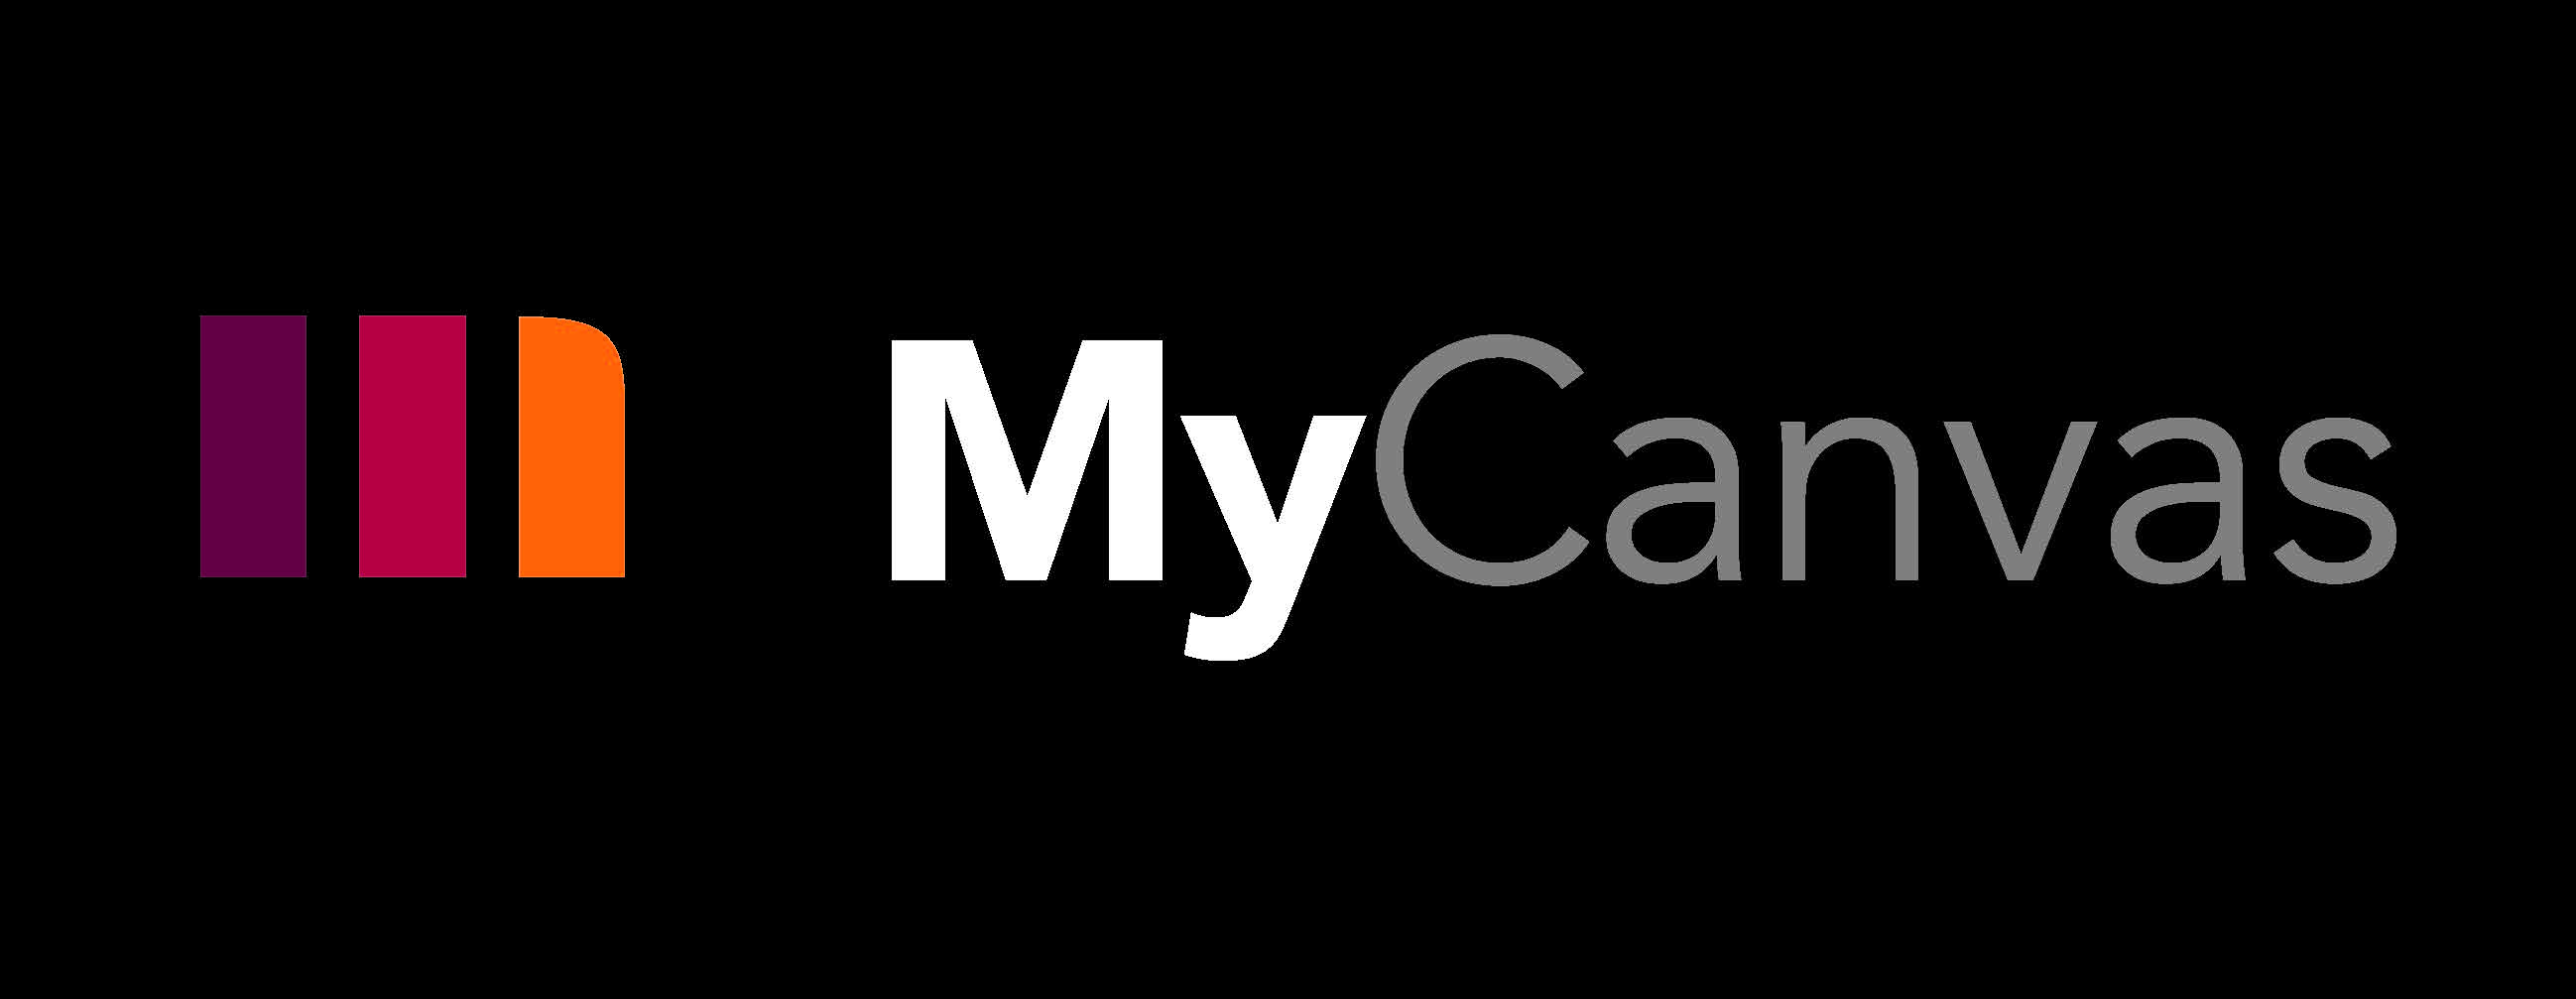 MyCanvas Logo.jpg